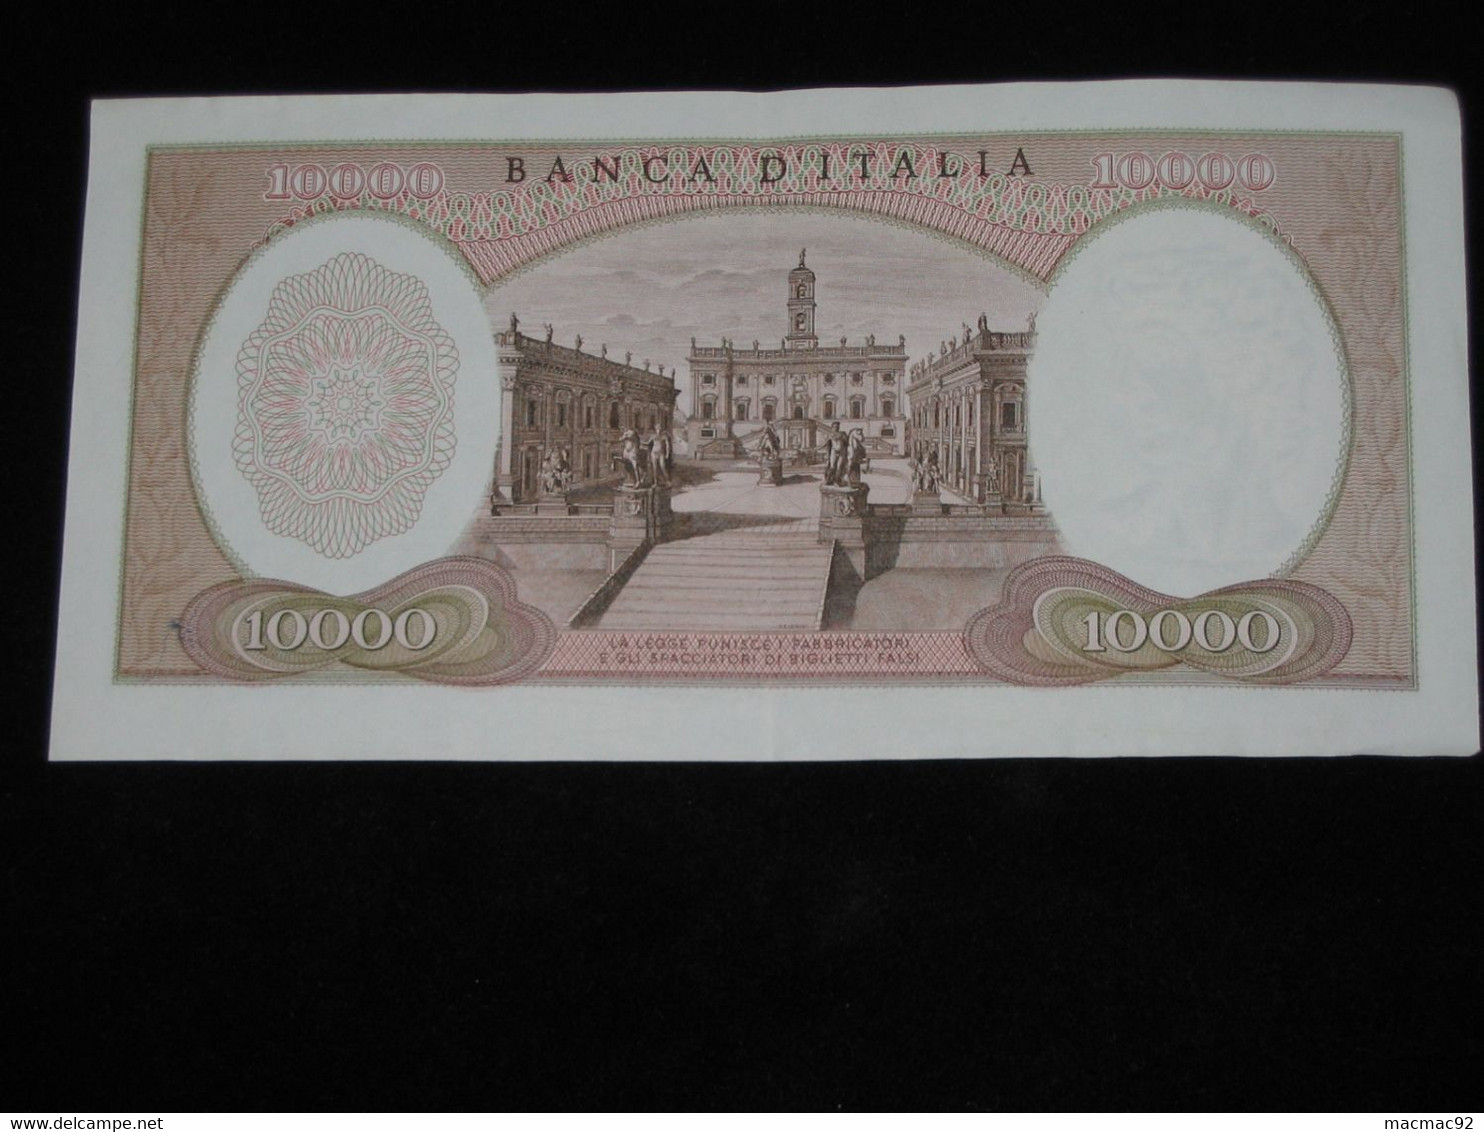 ITALIE - 10 000 Diecimila Lire  - Banca D'Italia 1973. **** EN ACHAT IMMEDIAT **** - 10.000 Lire